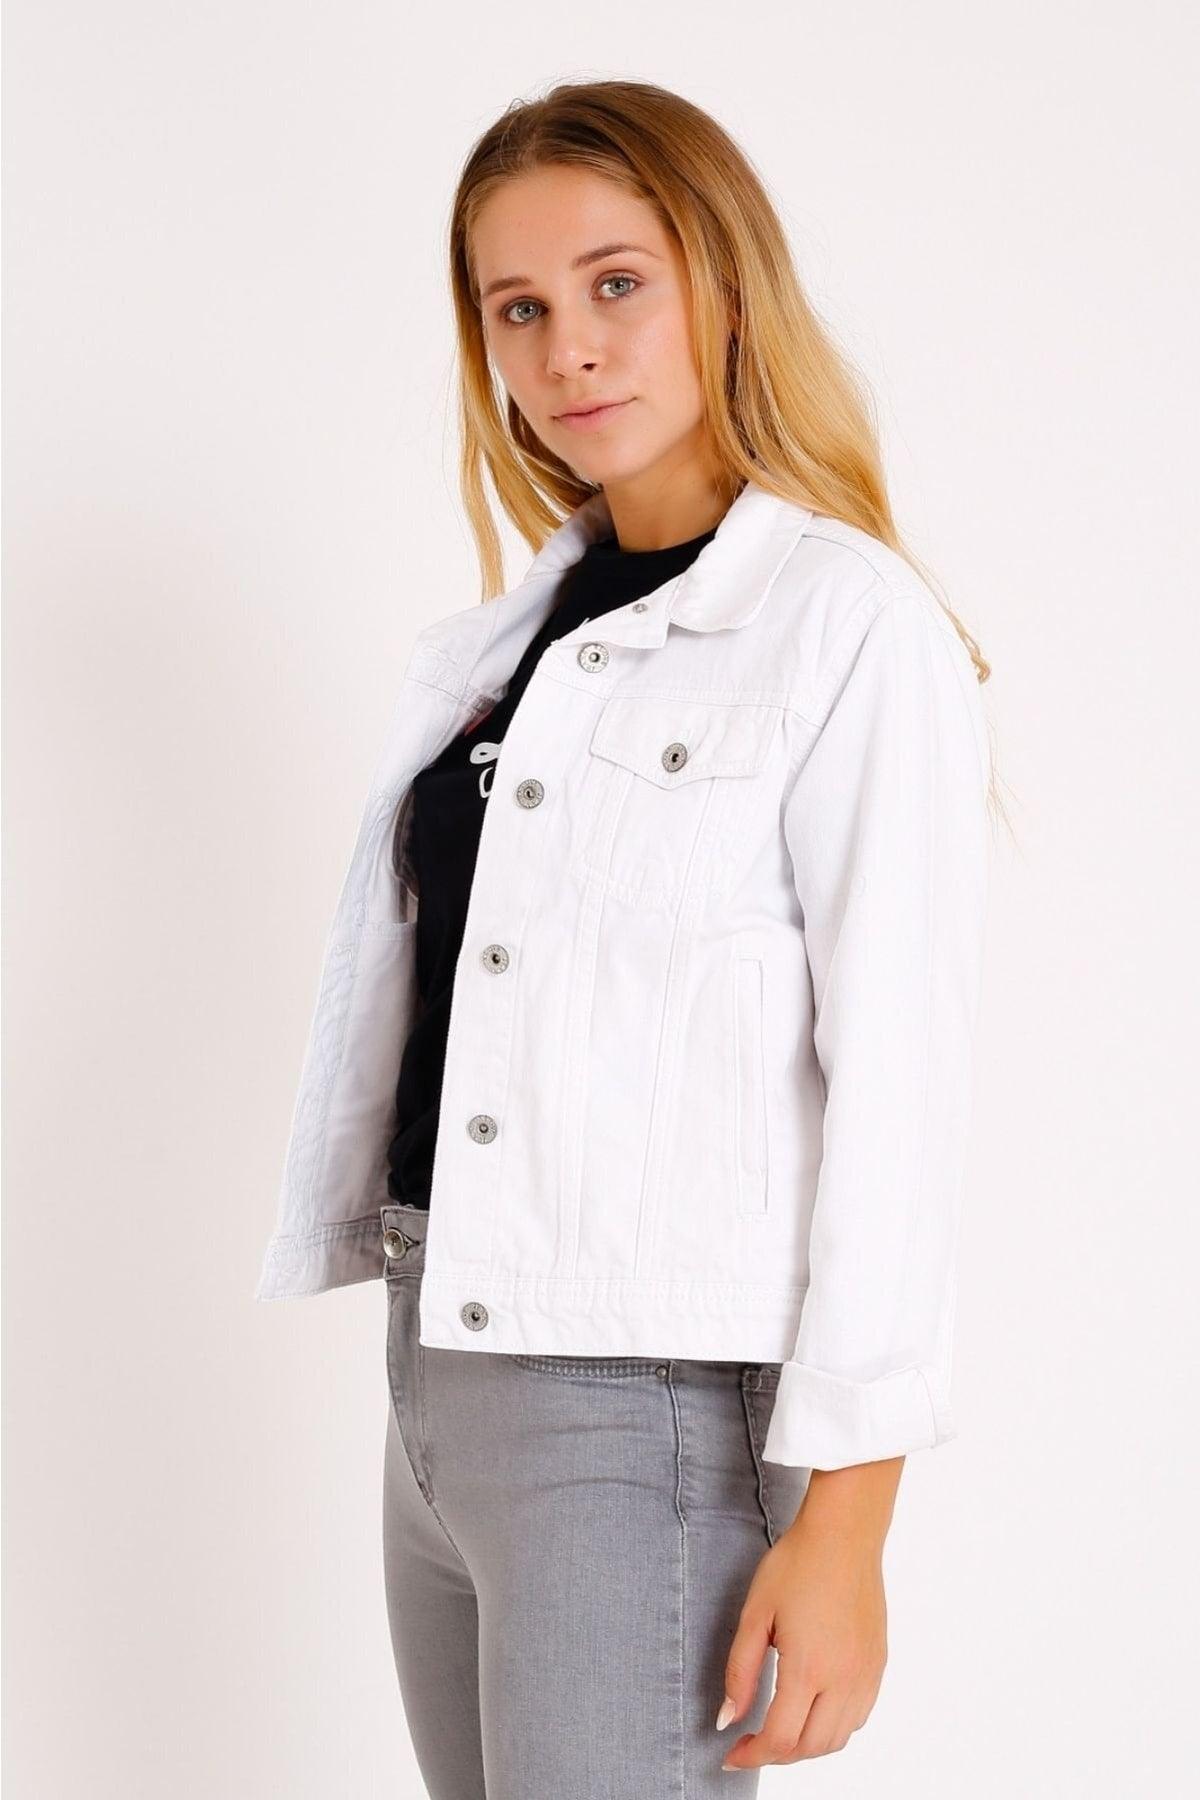 Classic Collar Standard Sleeve Pocket Unlined Short Jeans Women's Jacket Cotton All Seasons - Swordslife